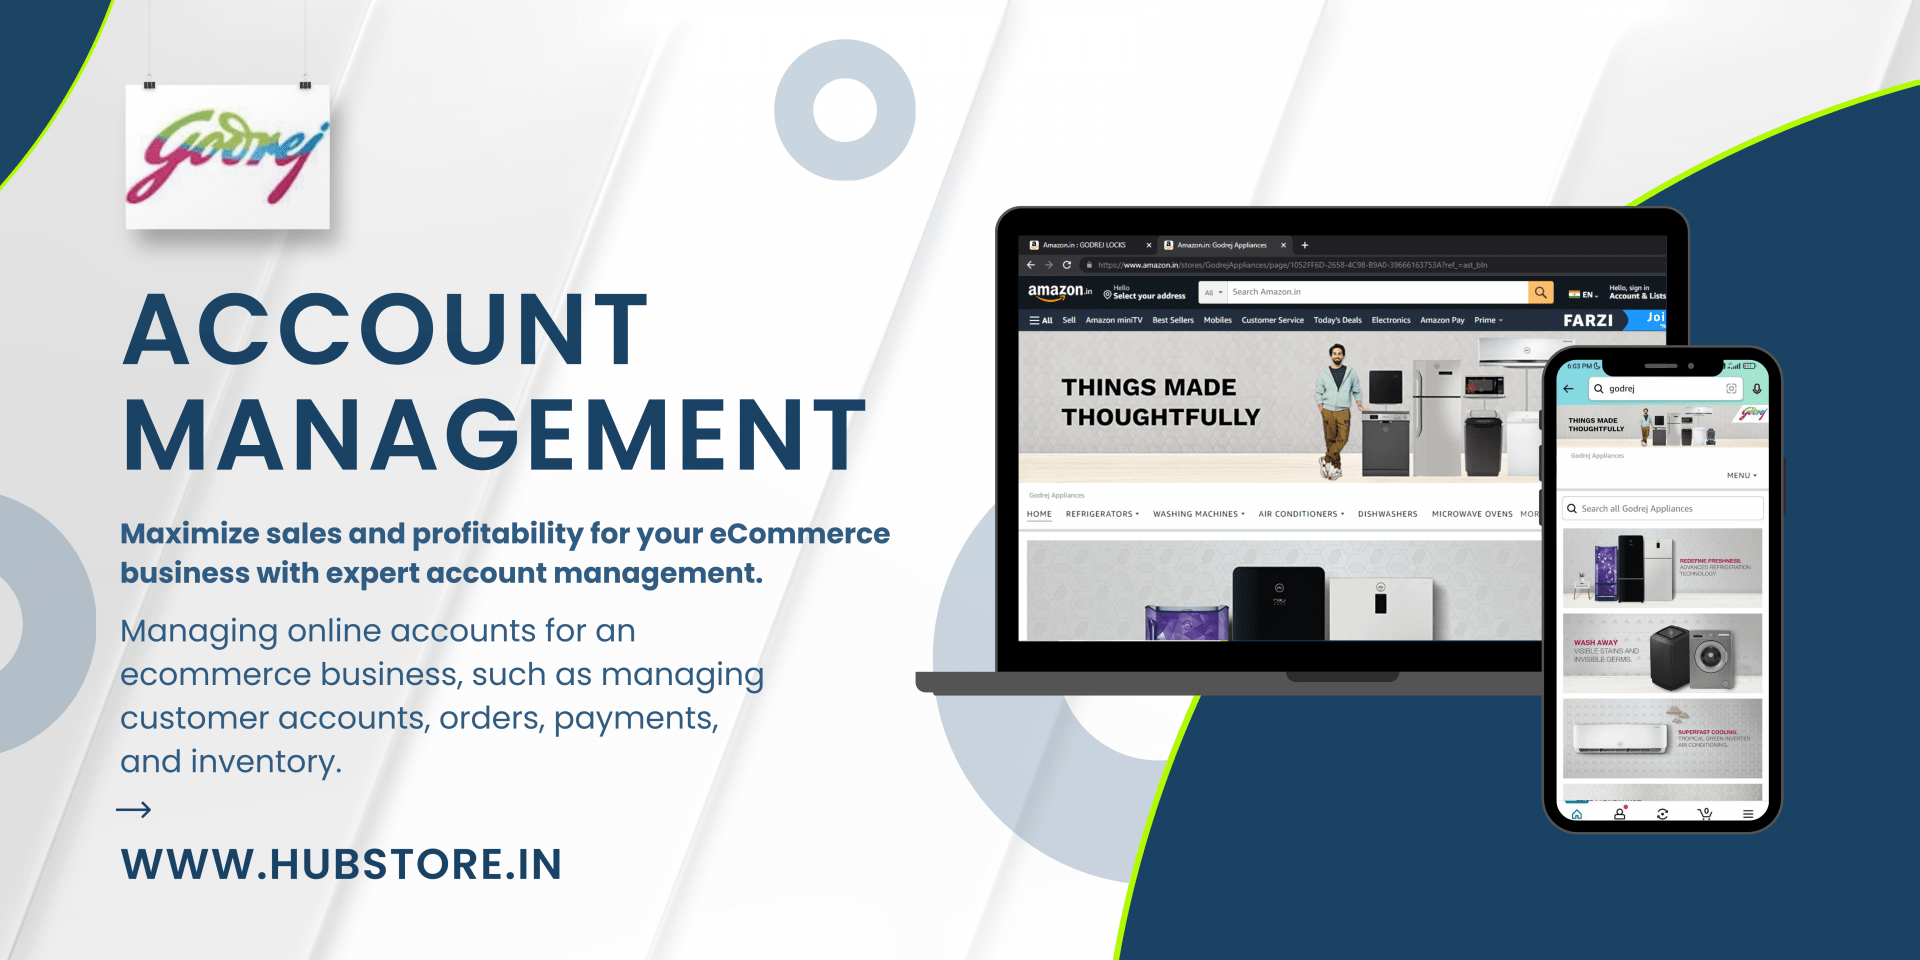 Godrej - Account Management